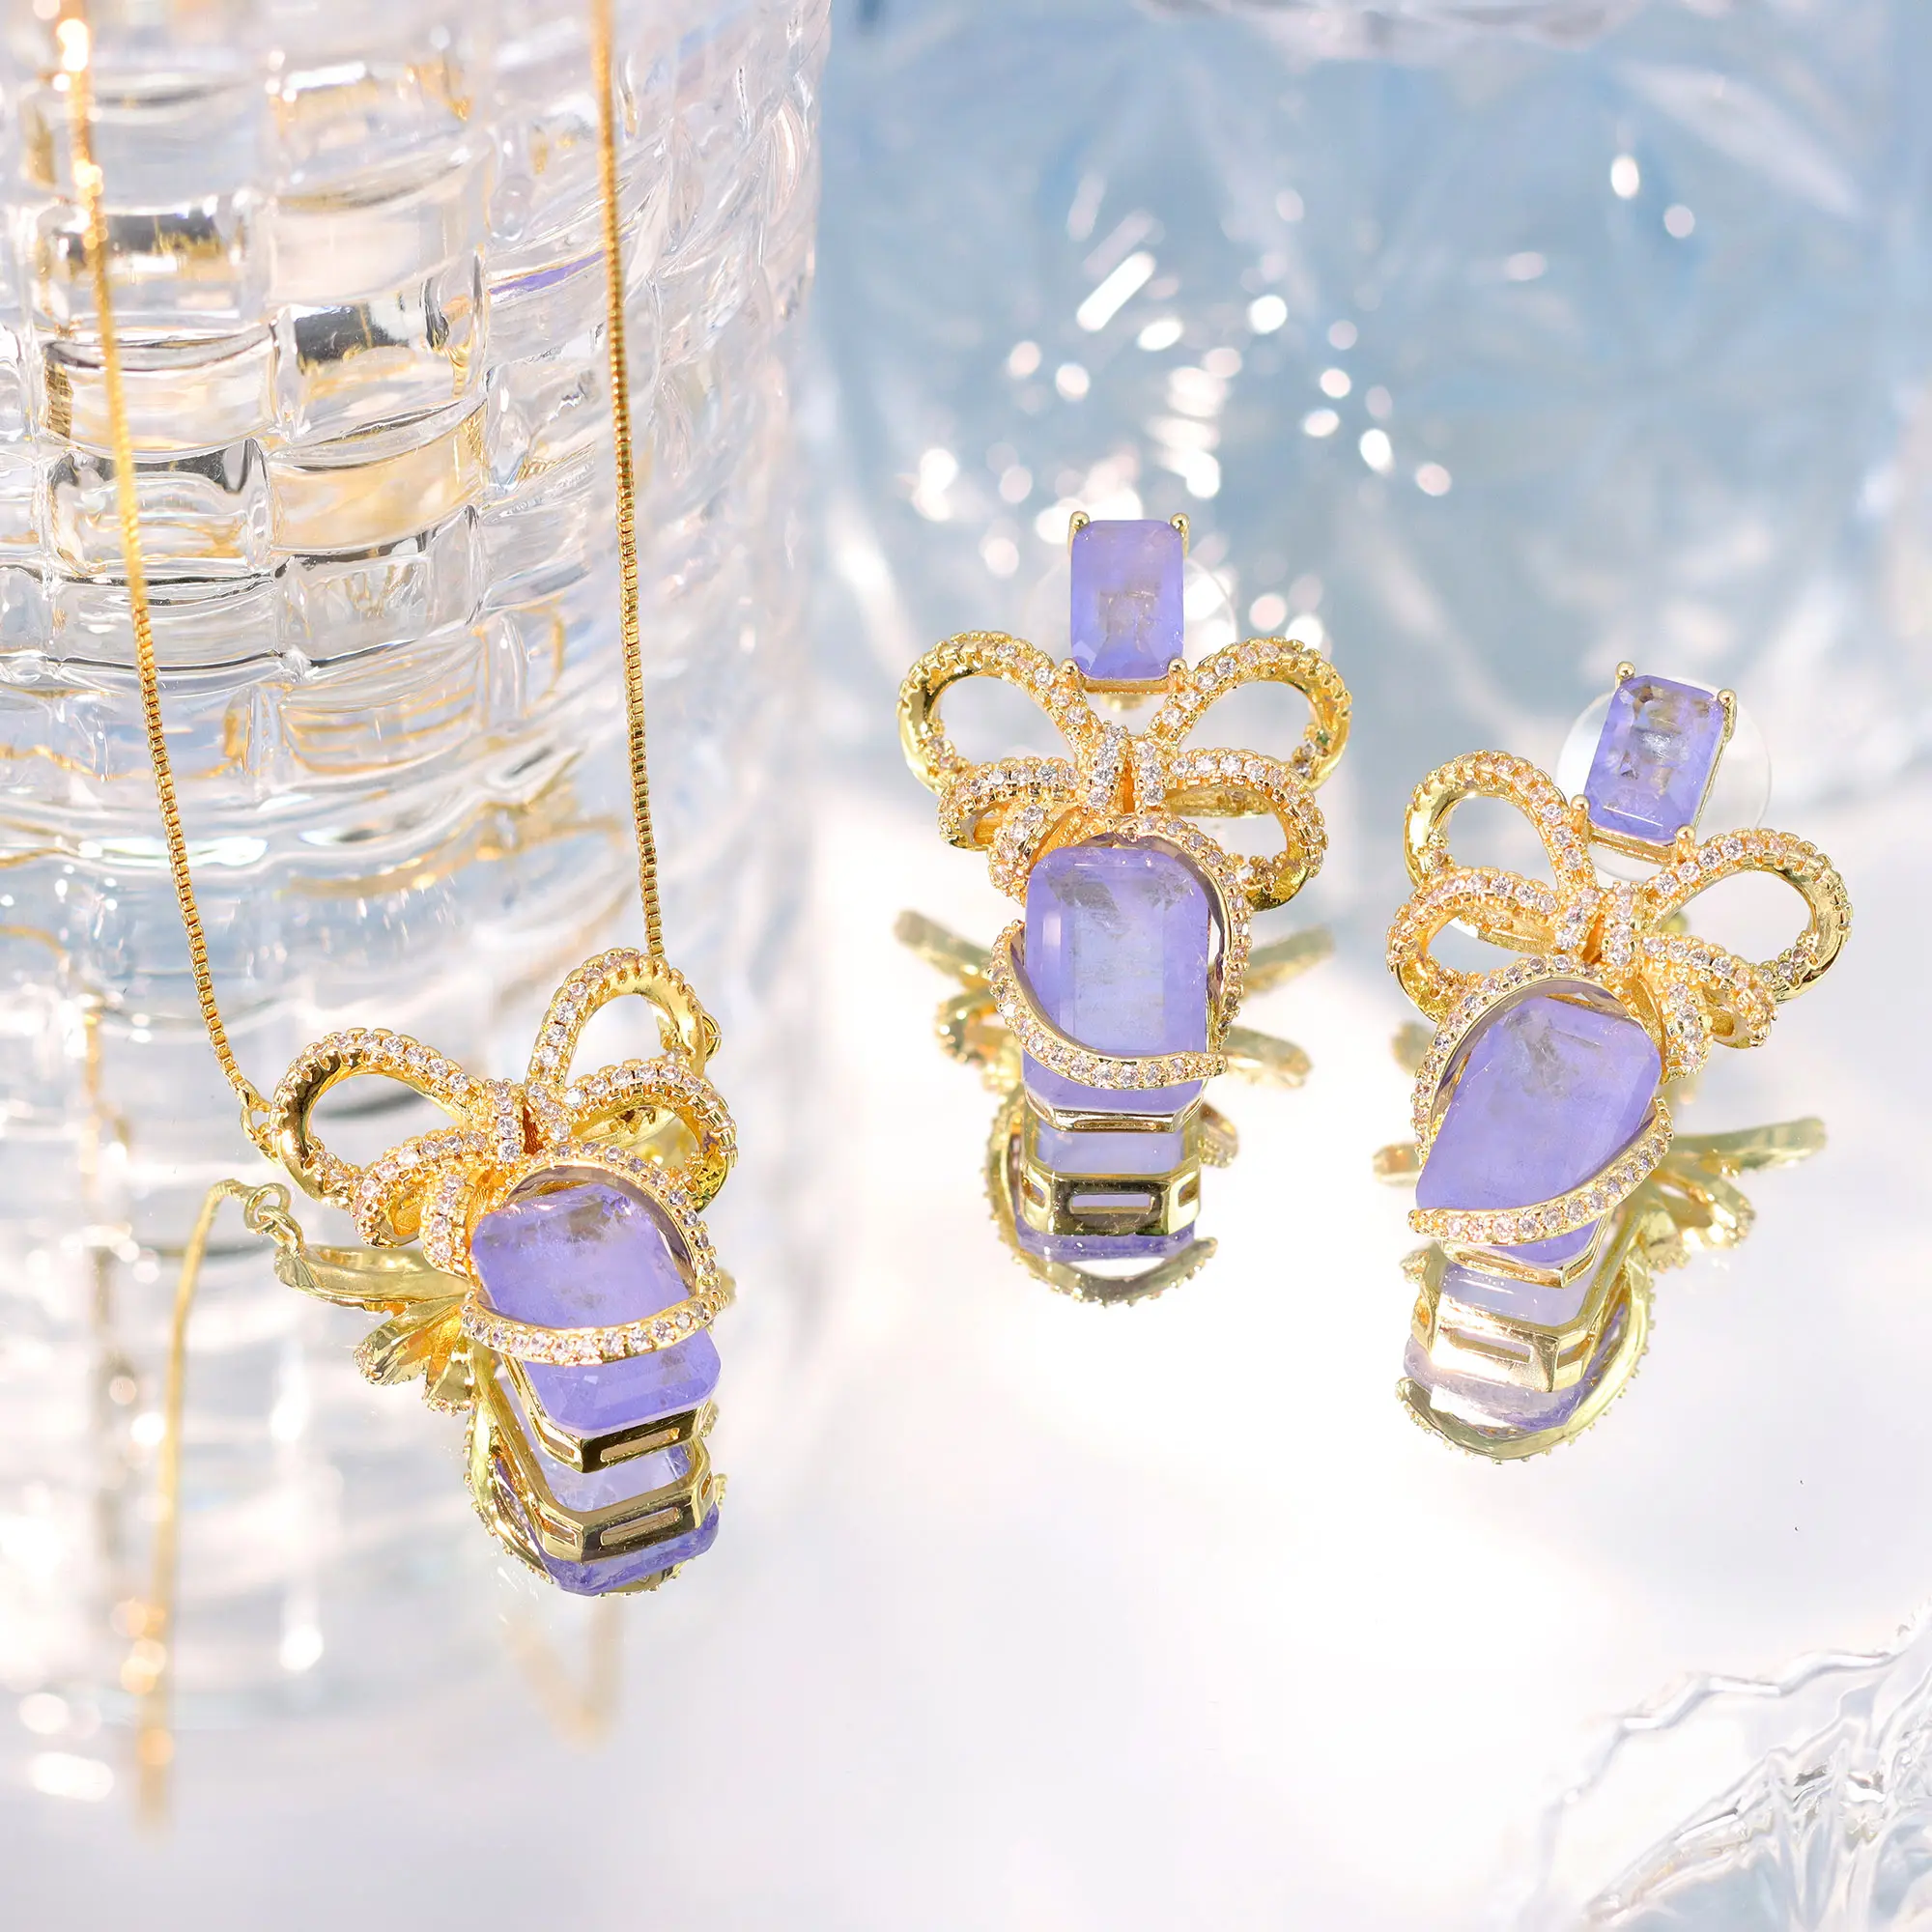 Luxury rectangular fusion stone Jewelry Sets pendant necklace earrings Sets